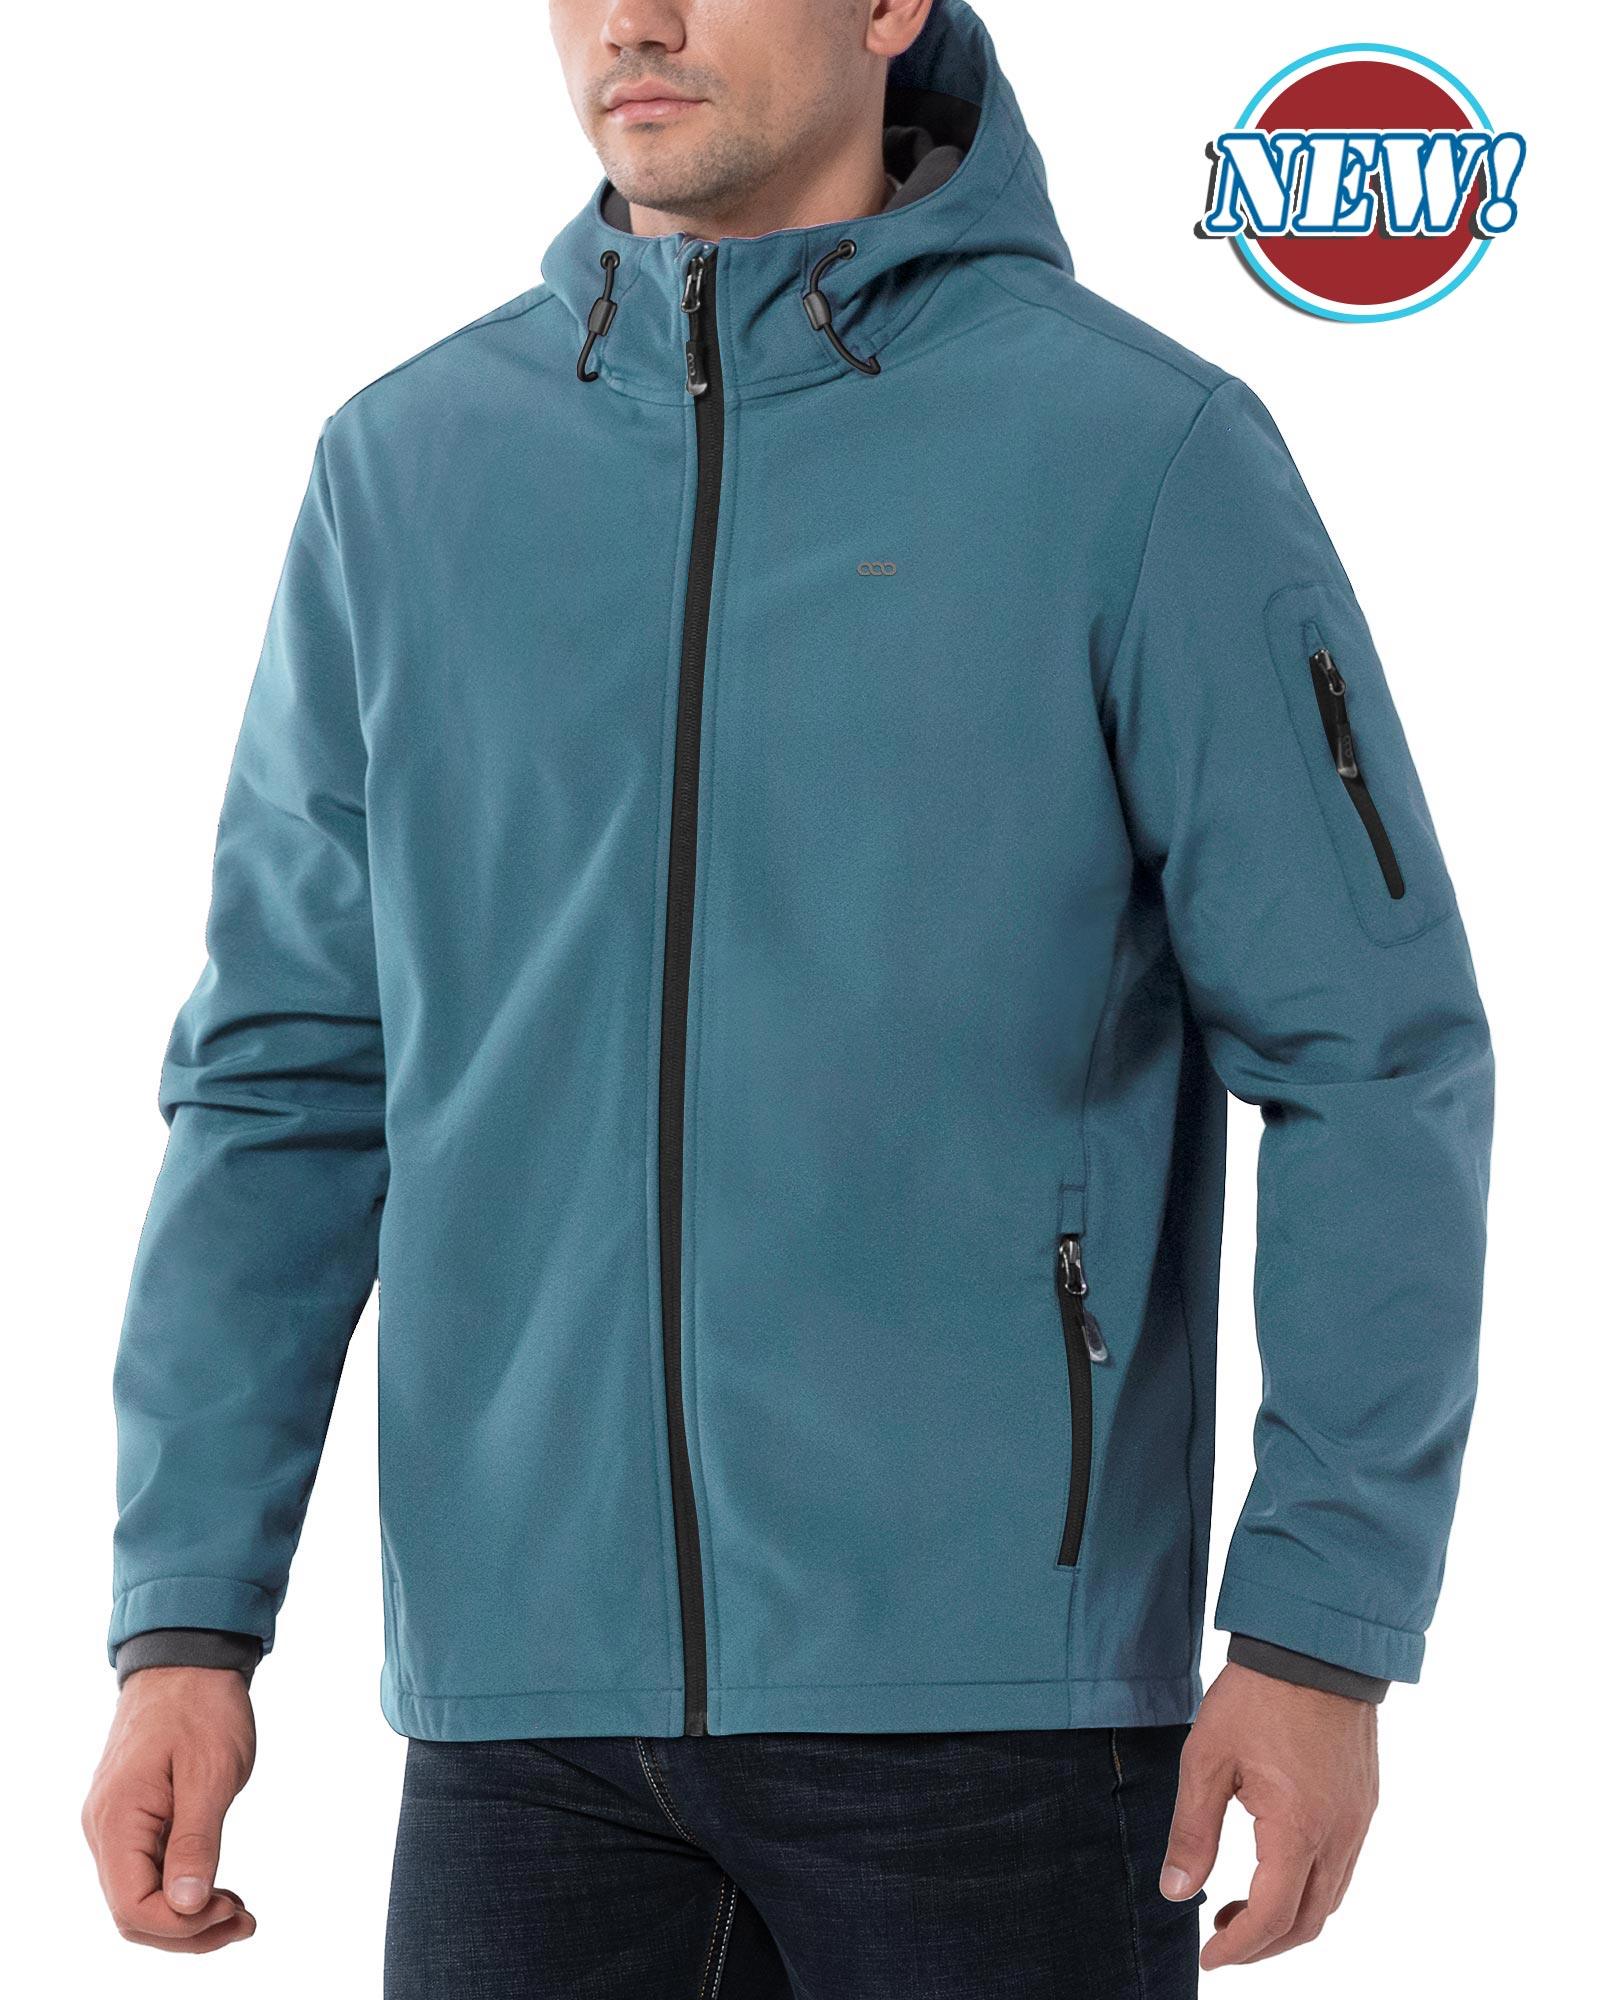 Men's Softshell Jacket Fleece Lined, Water Resistant Winter Warm Shell –  33,000ft